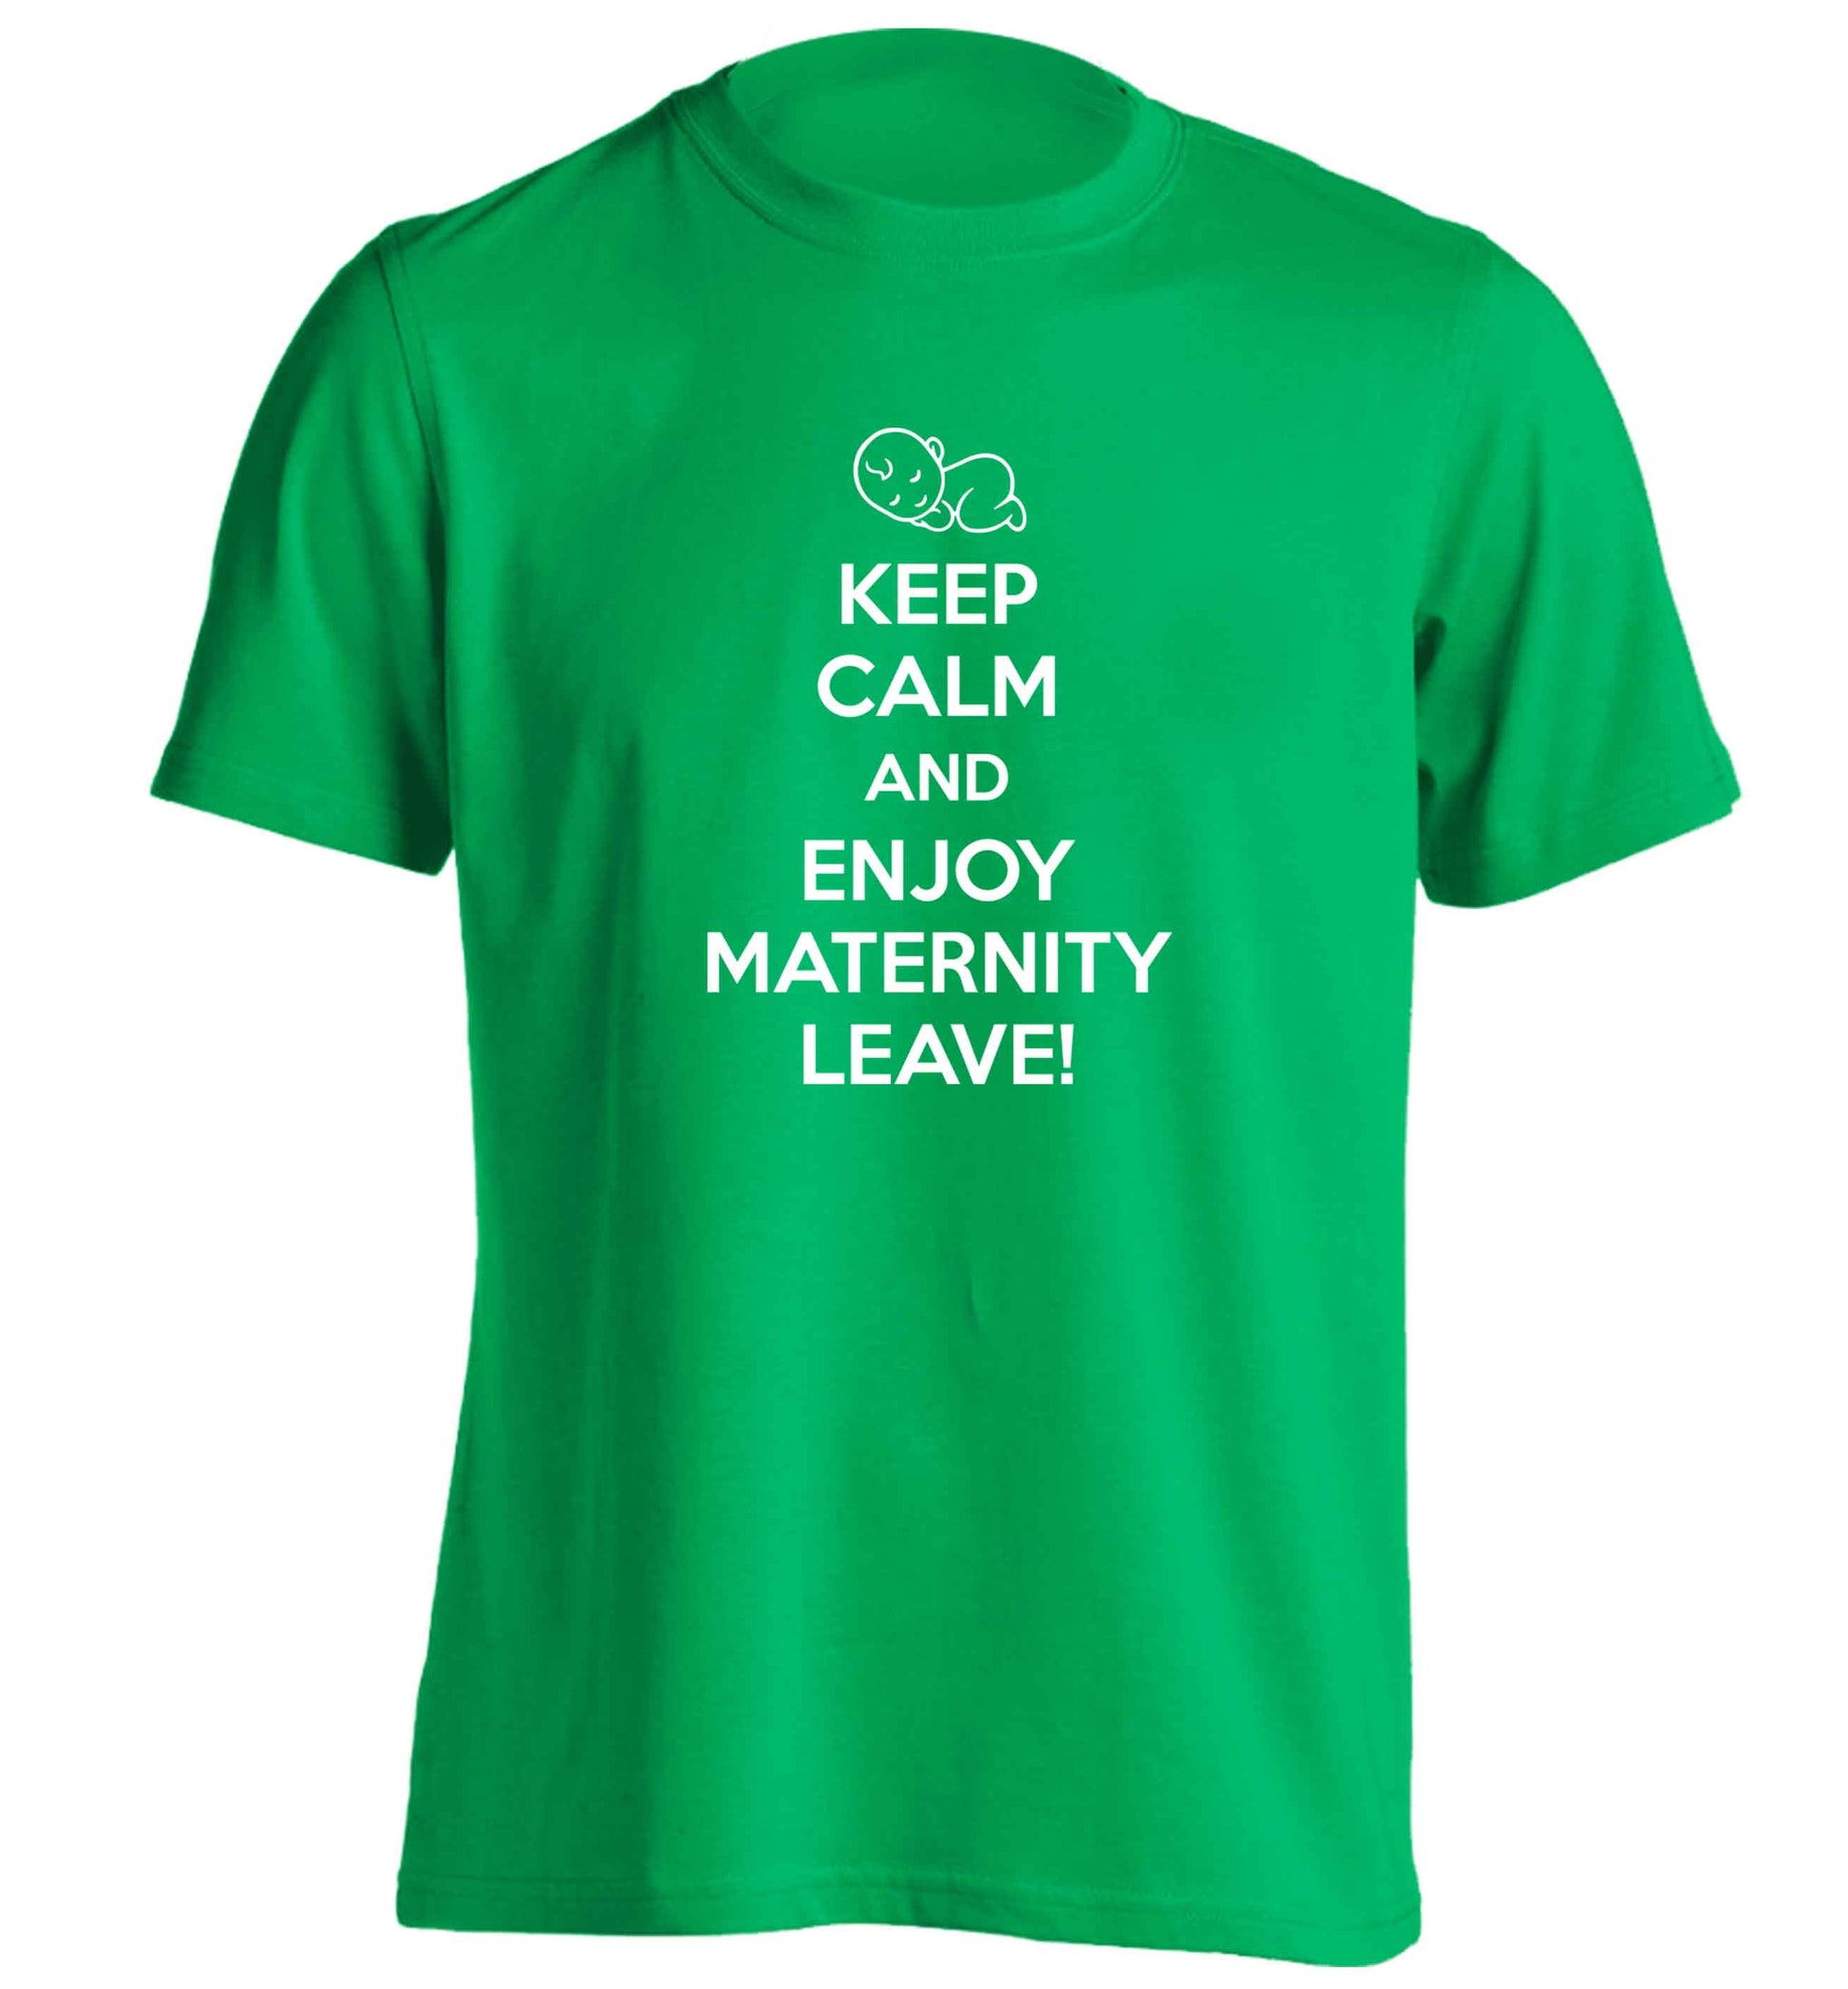 Keep calm and enjoy maternity leave adults unisex green Tshirt 2XL